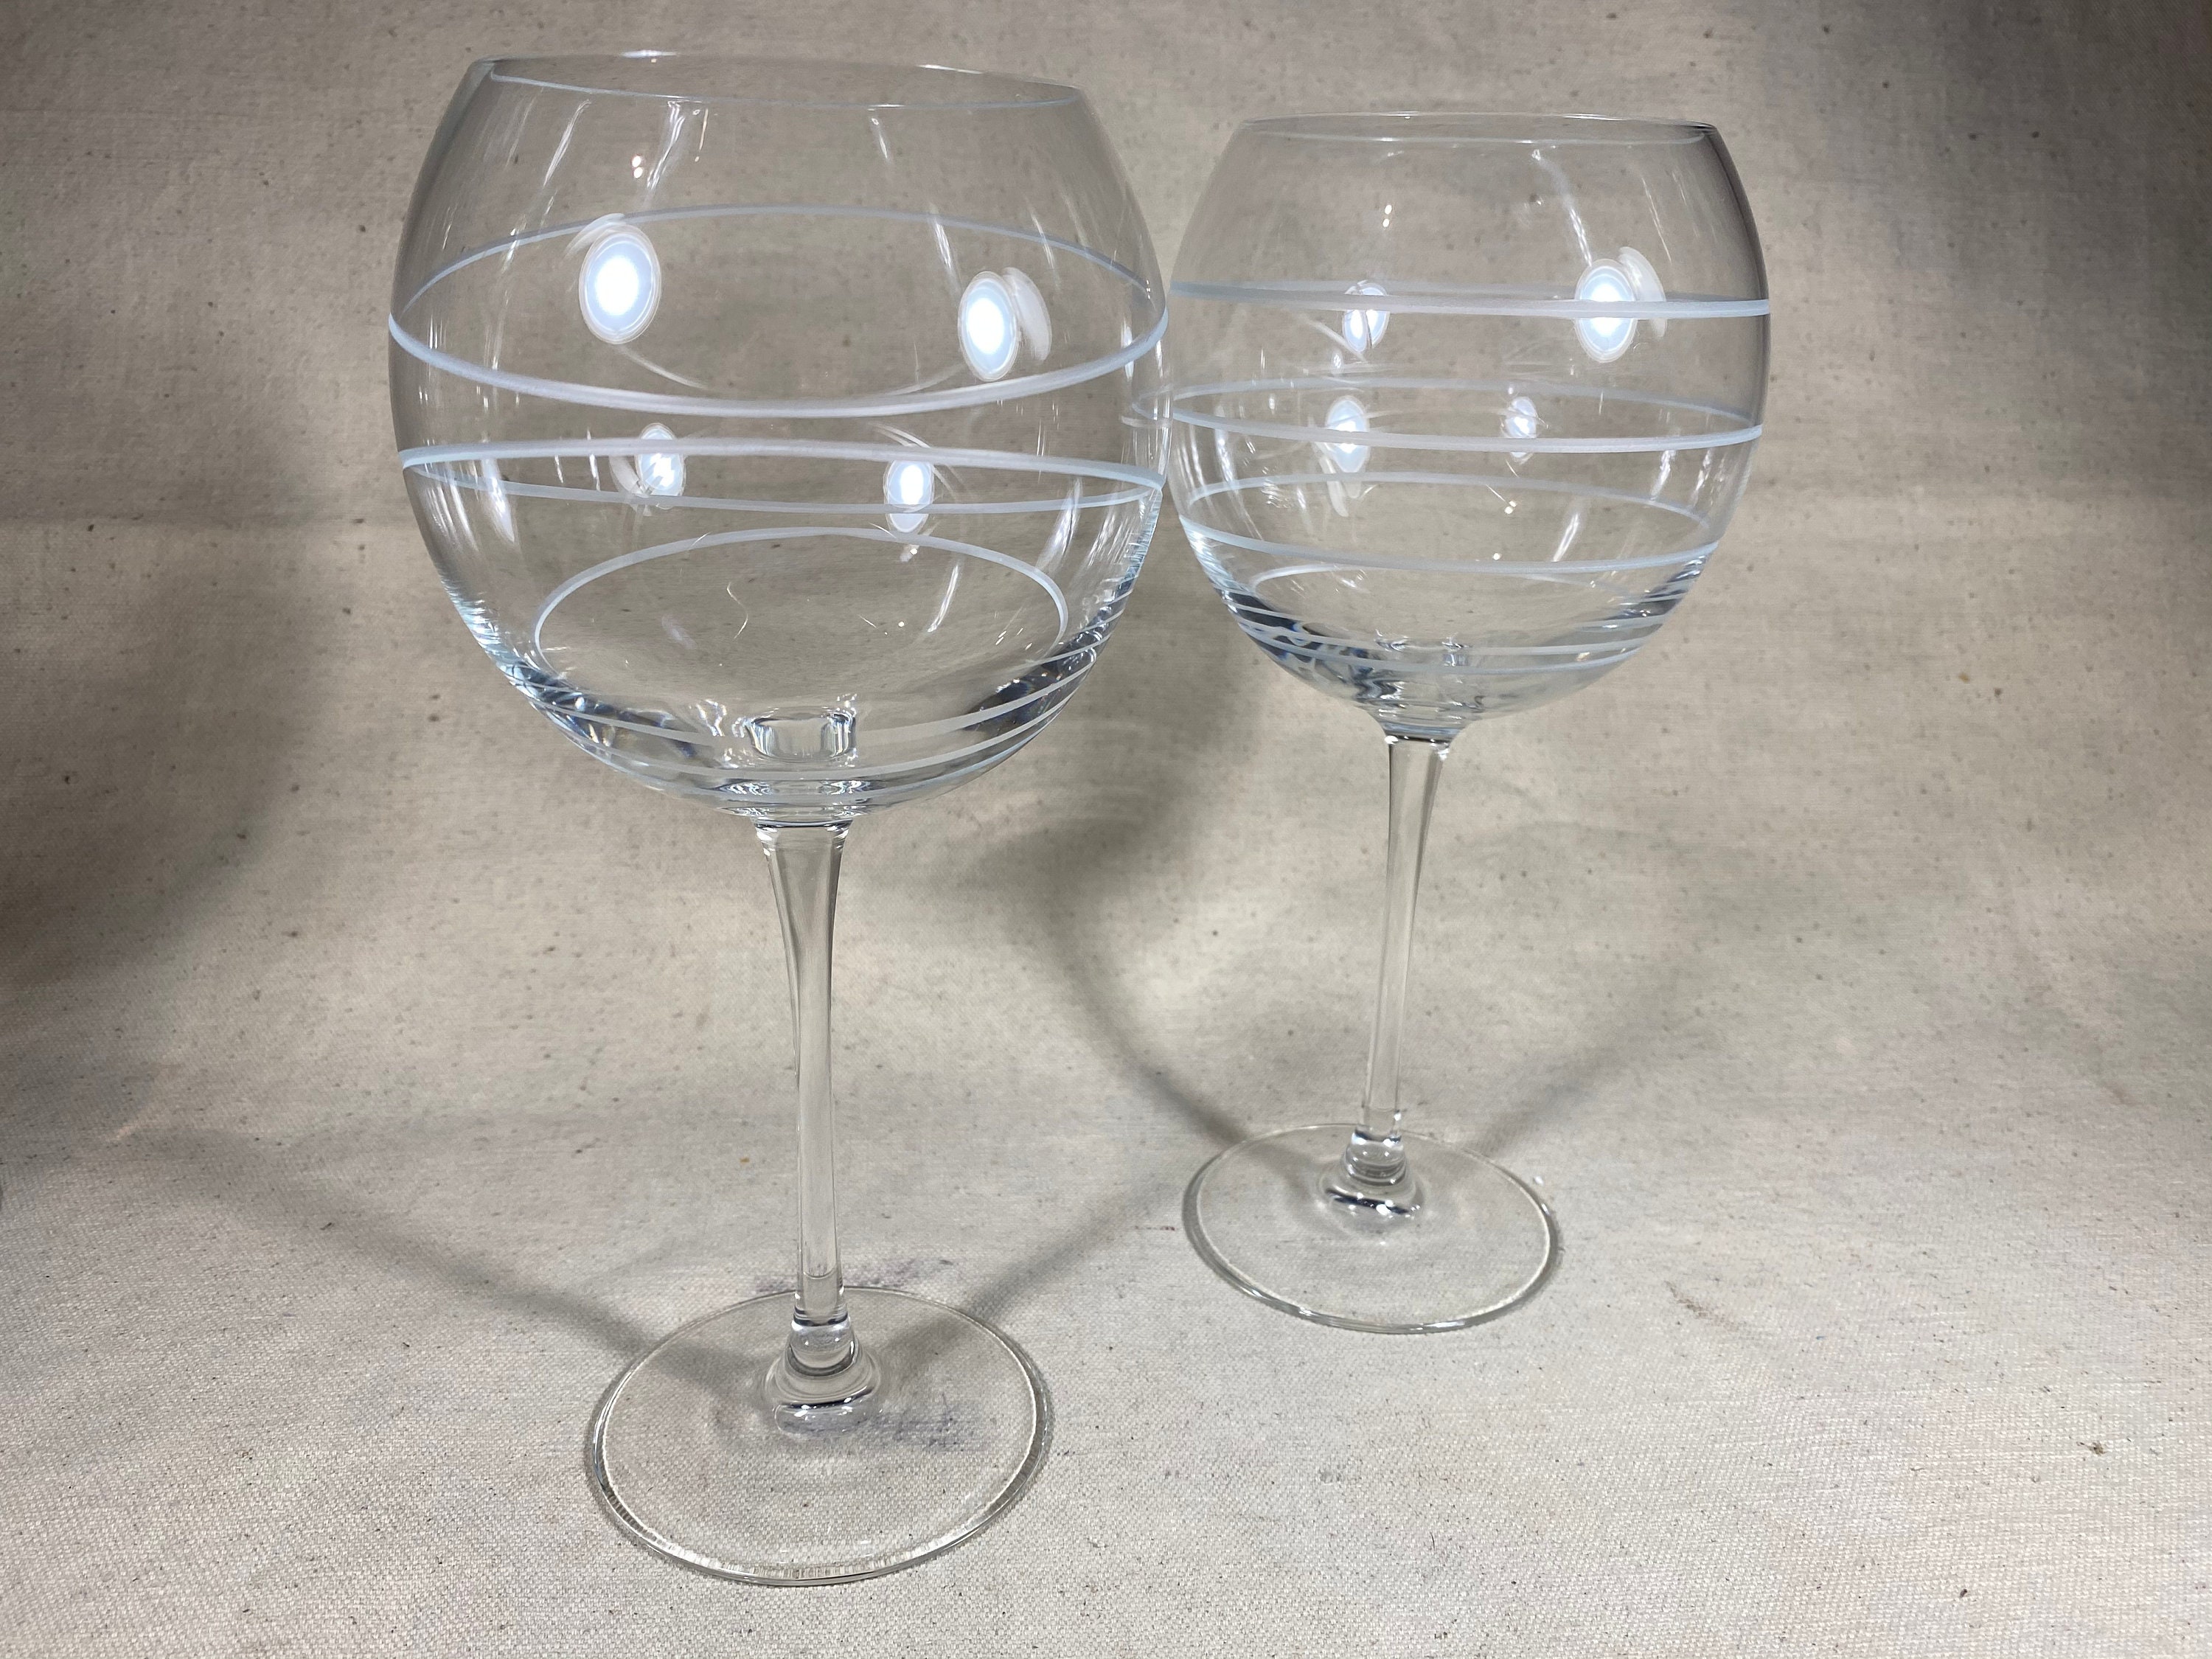 MIKASA Cheers Etched Polka Dot & Striped Festive Martini Glasses Set of 2 